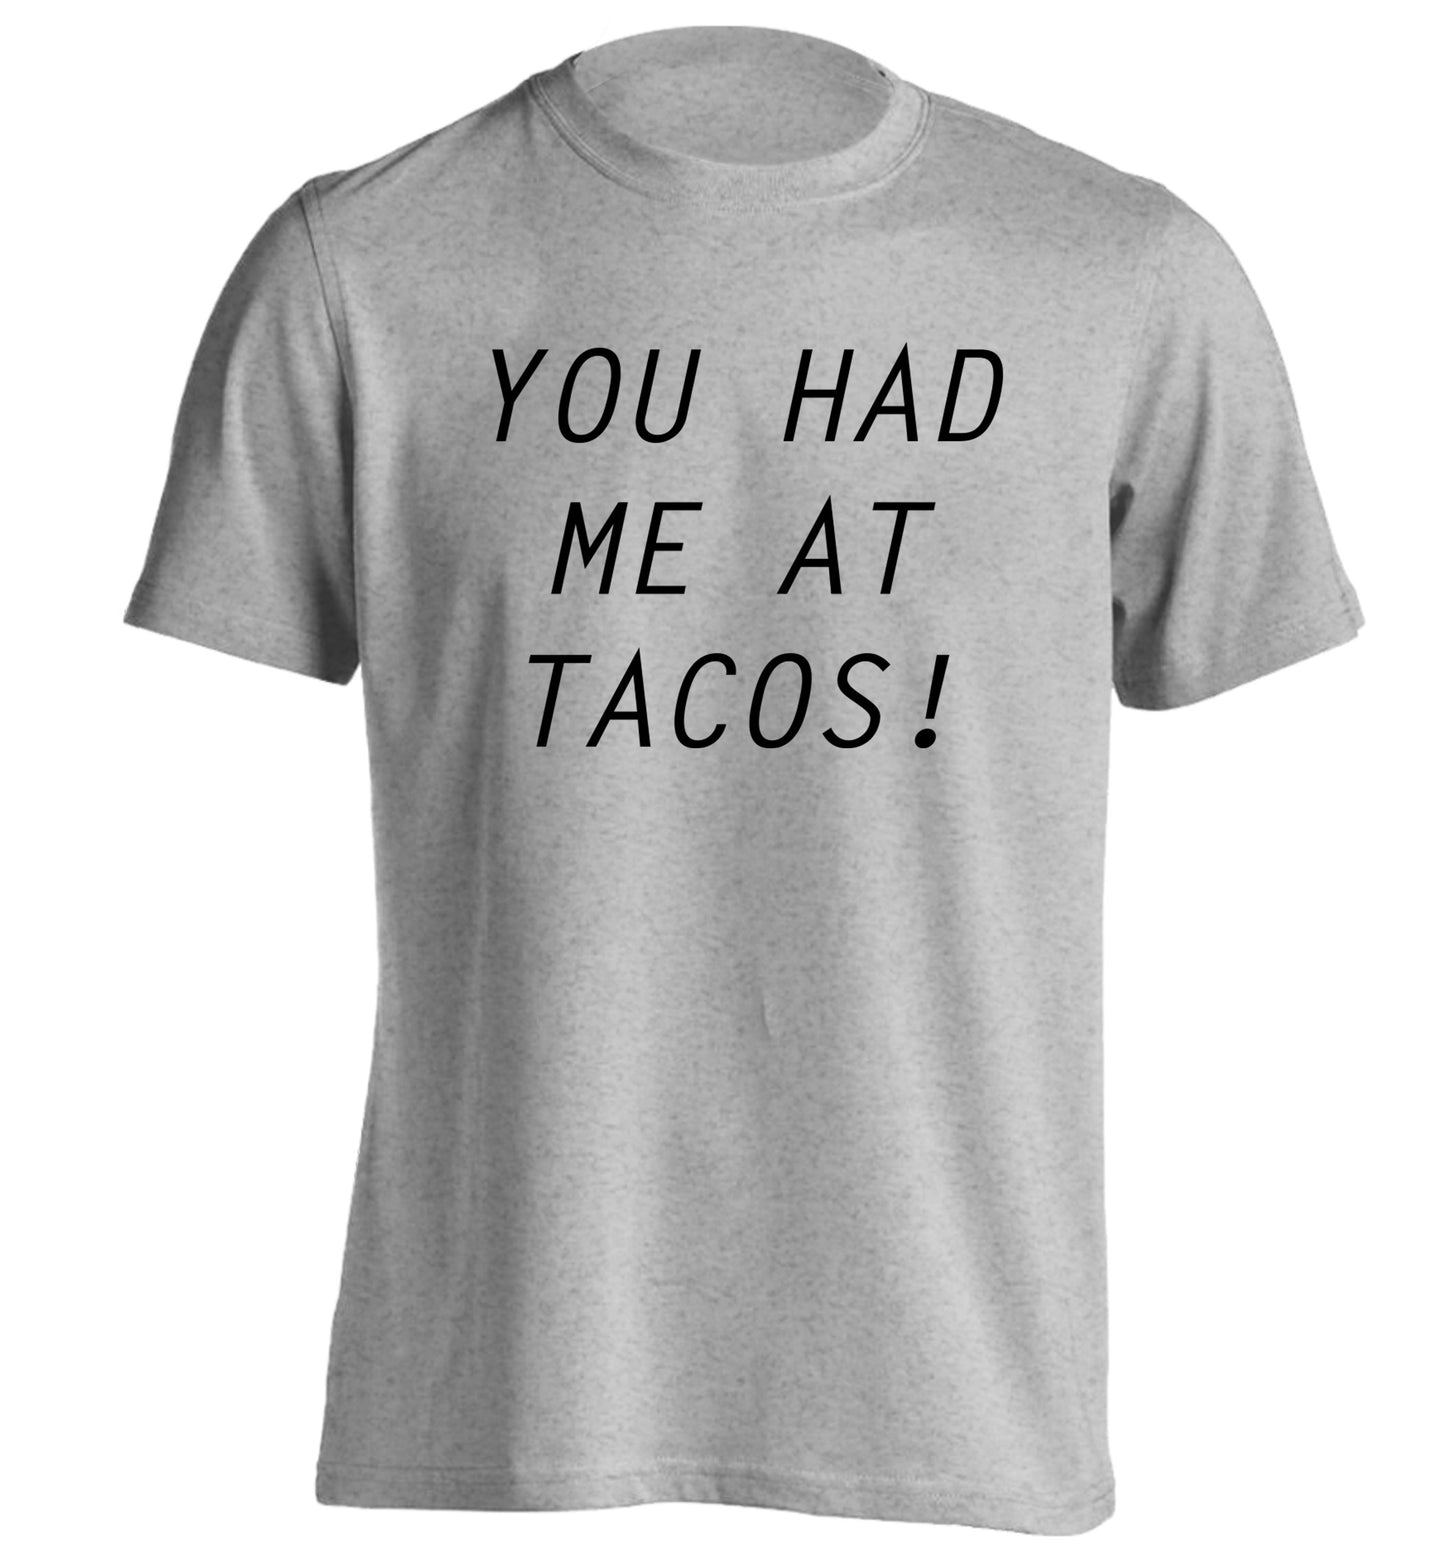 You had me at tacos adults unisex grey Tshirt 2XL